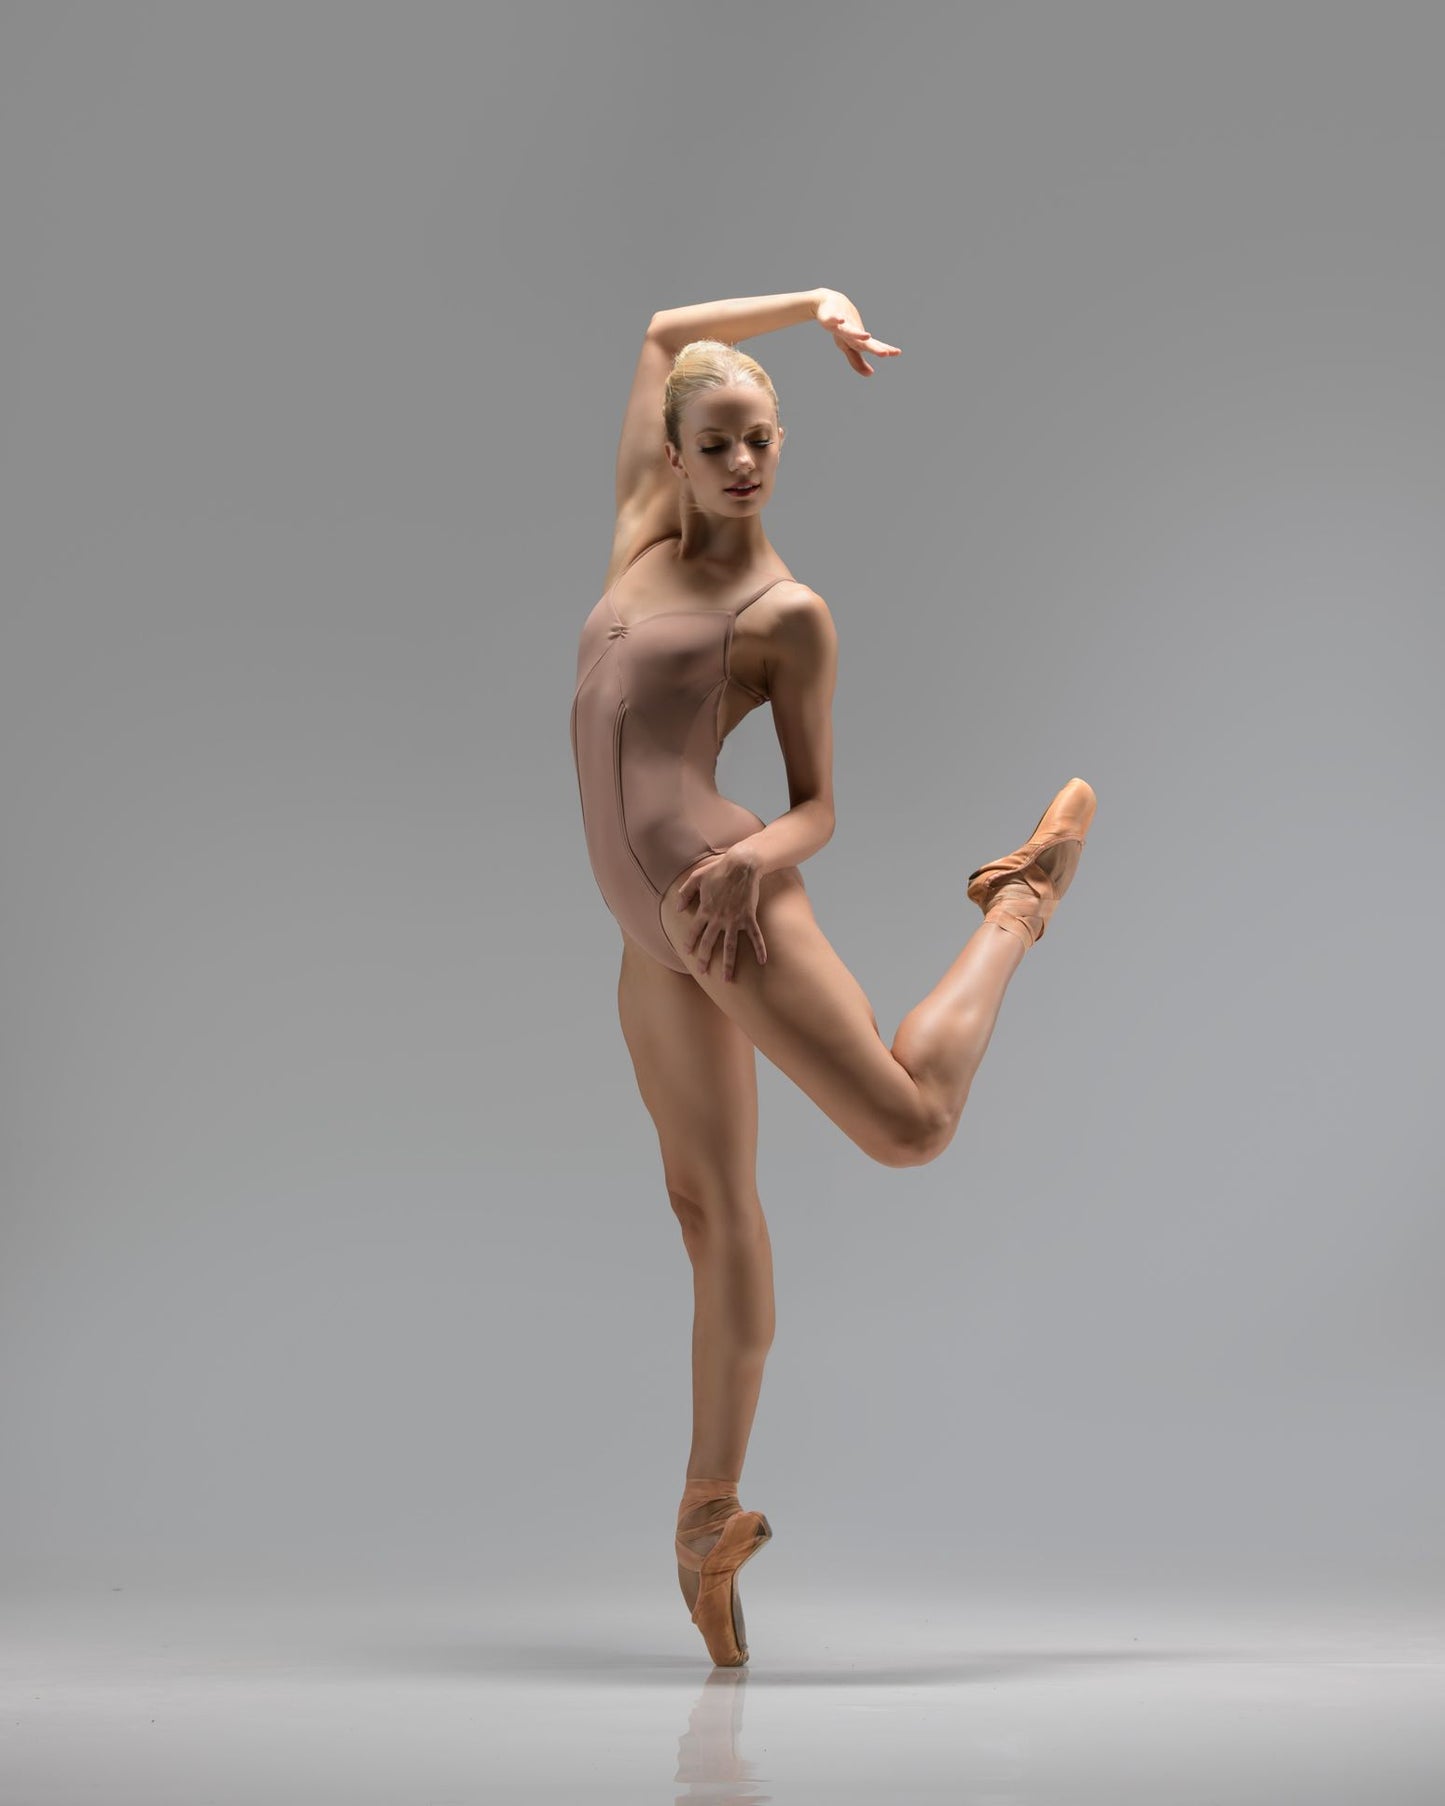 Maillot de ballet AUDREY ADULTO de Ballet Rosa